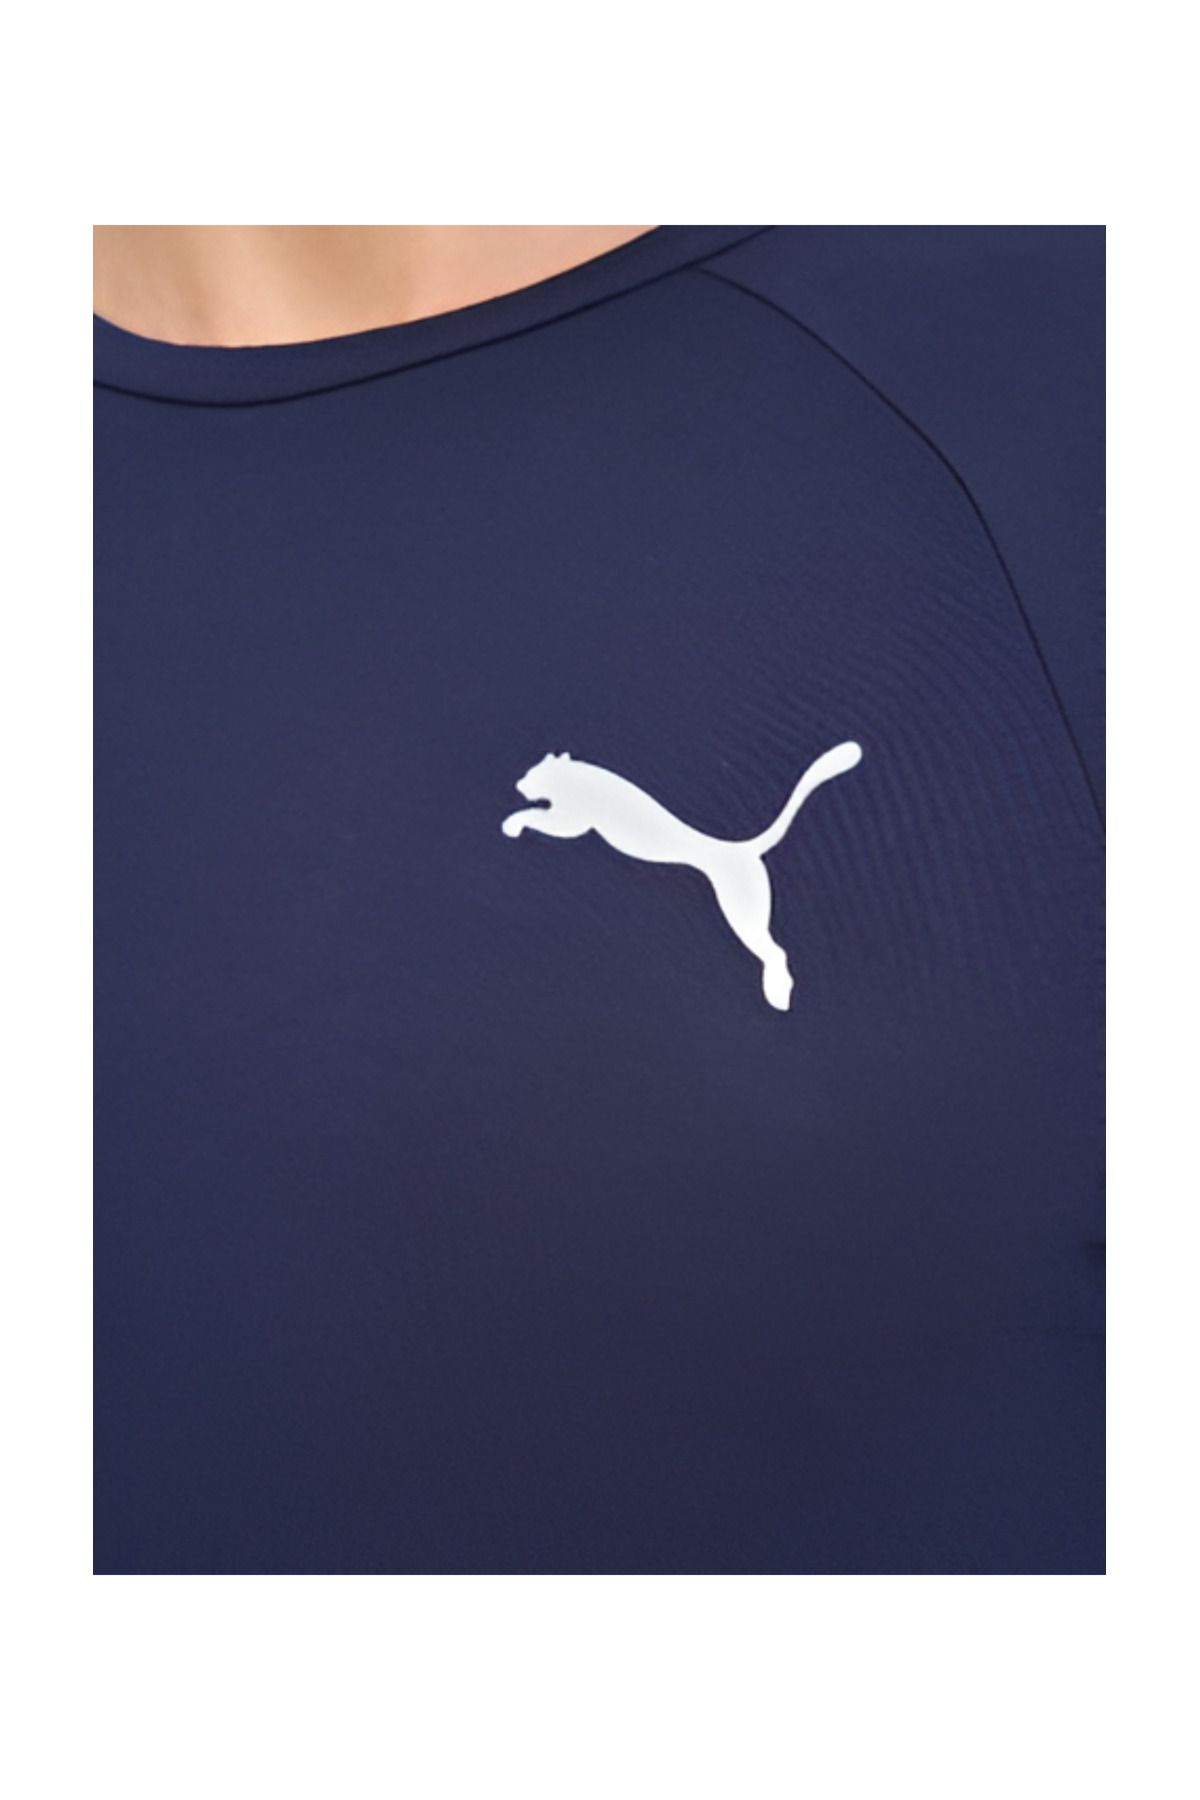 Puma Puma تی شرت مردانه اوسترایپ رنگ آبی تیره